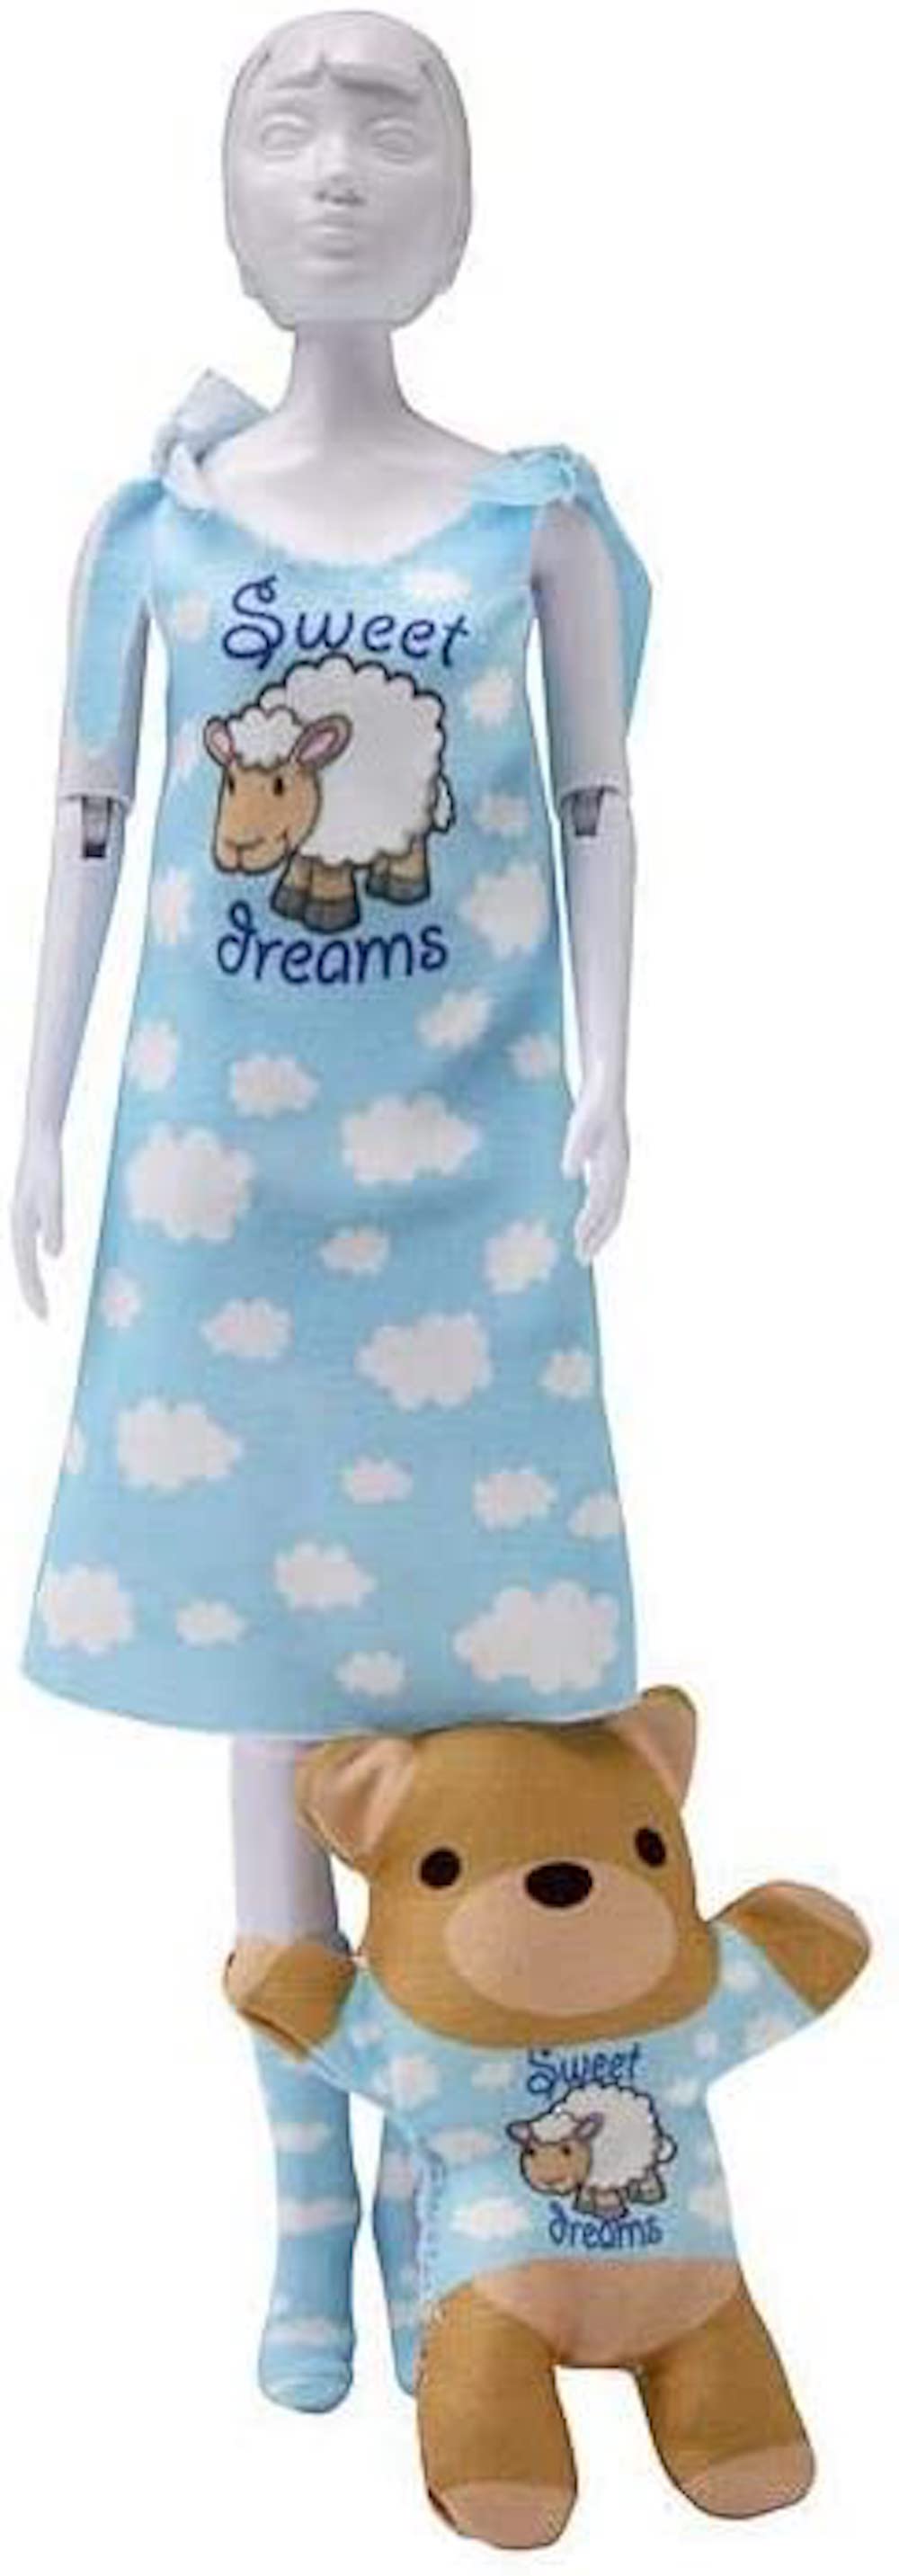 Dress your Doll  Nähe selbst ein Outfit für Deine Mode Puppe!  29cm  Sleepy sweetdreams